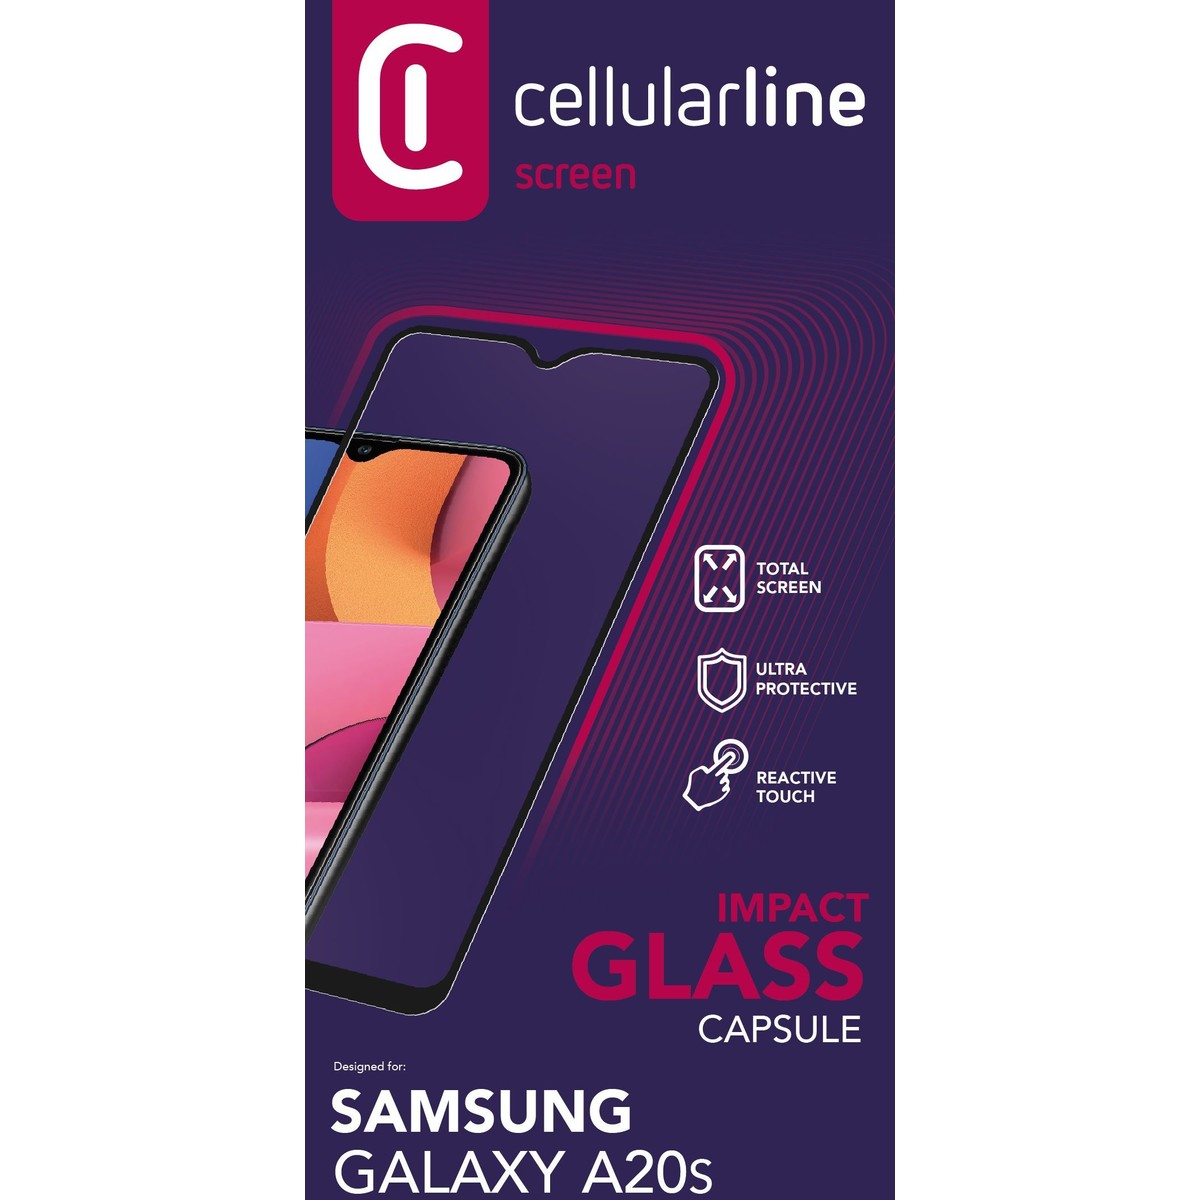 Schutzglas IMPACT GLASS CAPSULE für Samsung Galaxy A20s